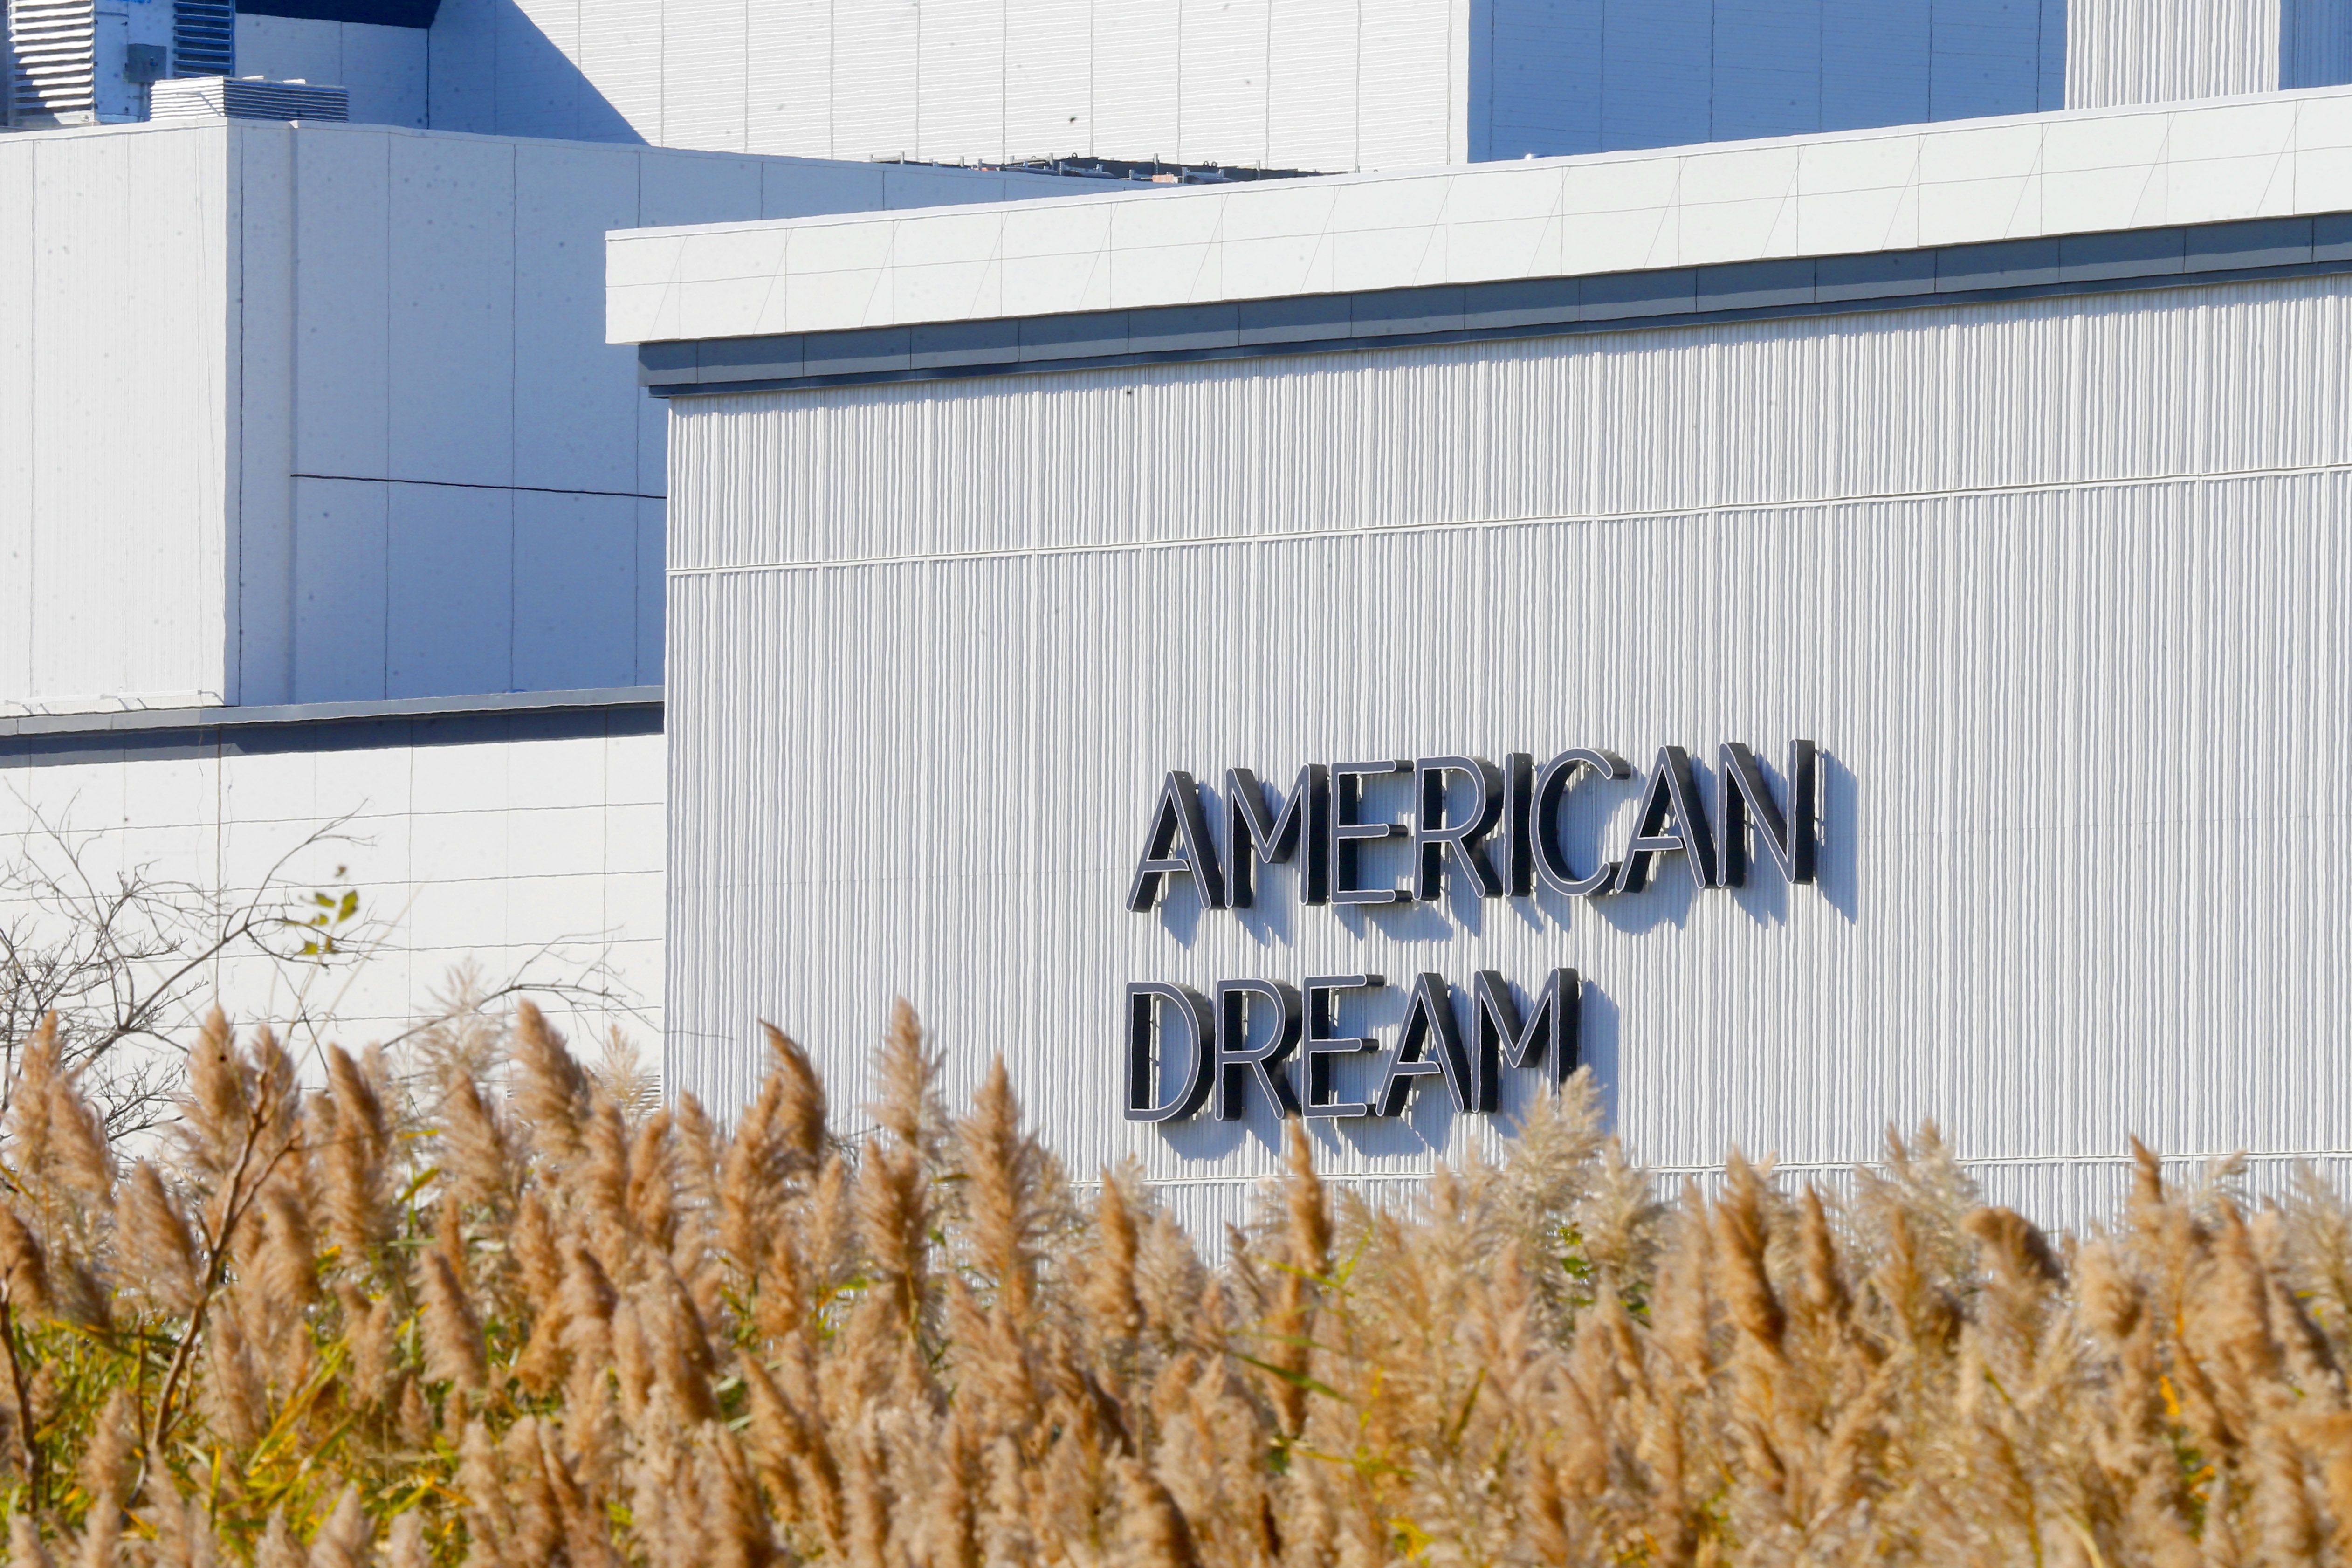 American Dream, NJ's massive entertainment and shopping complex, opens